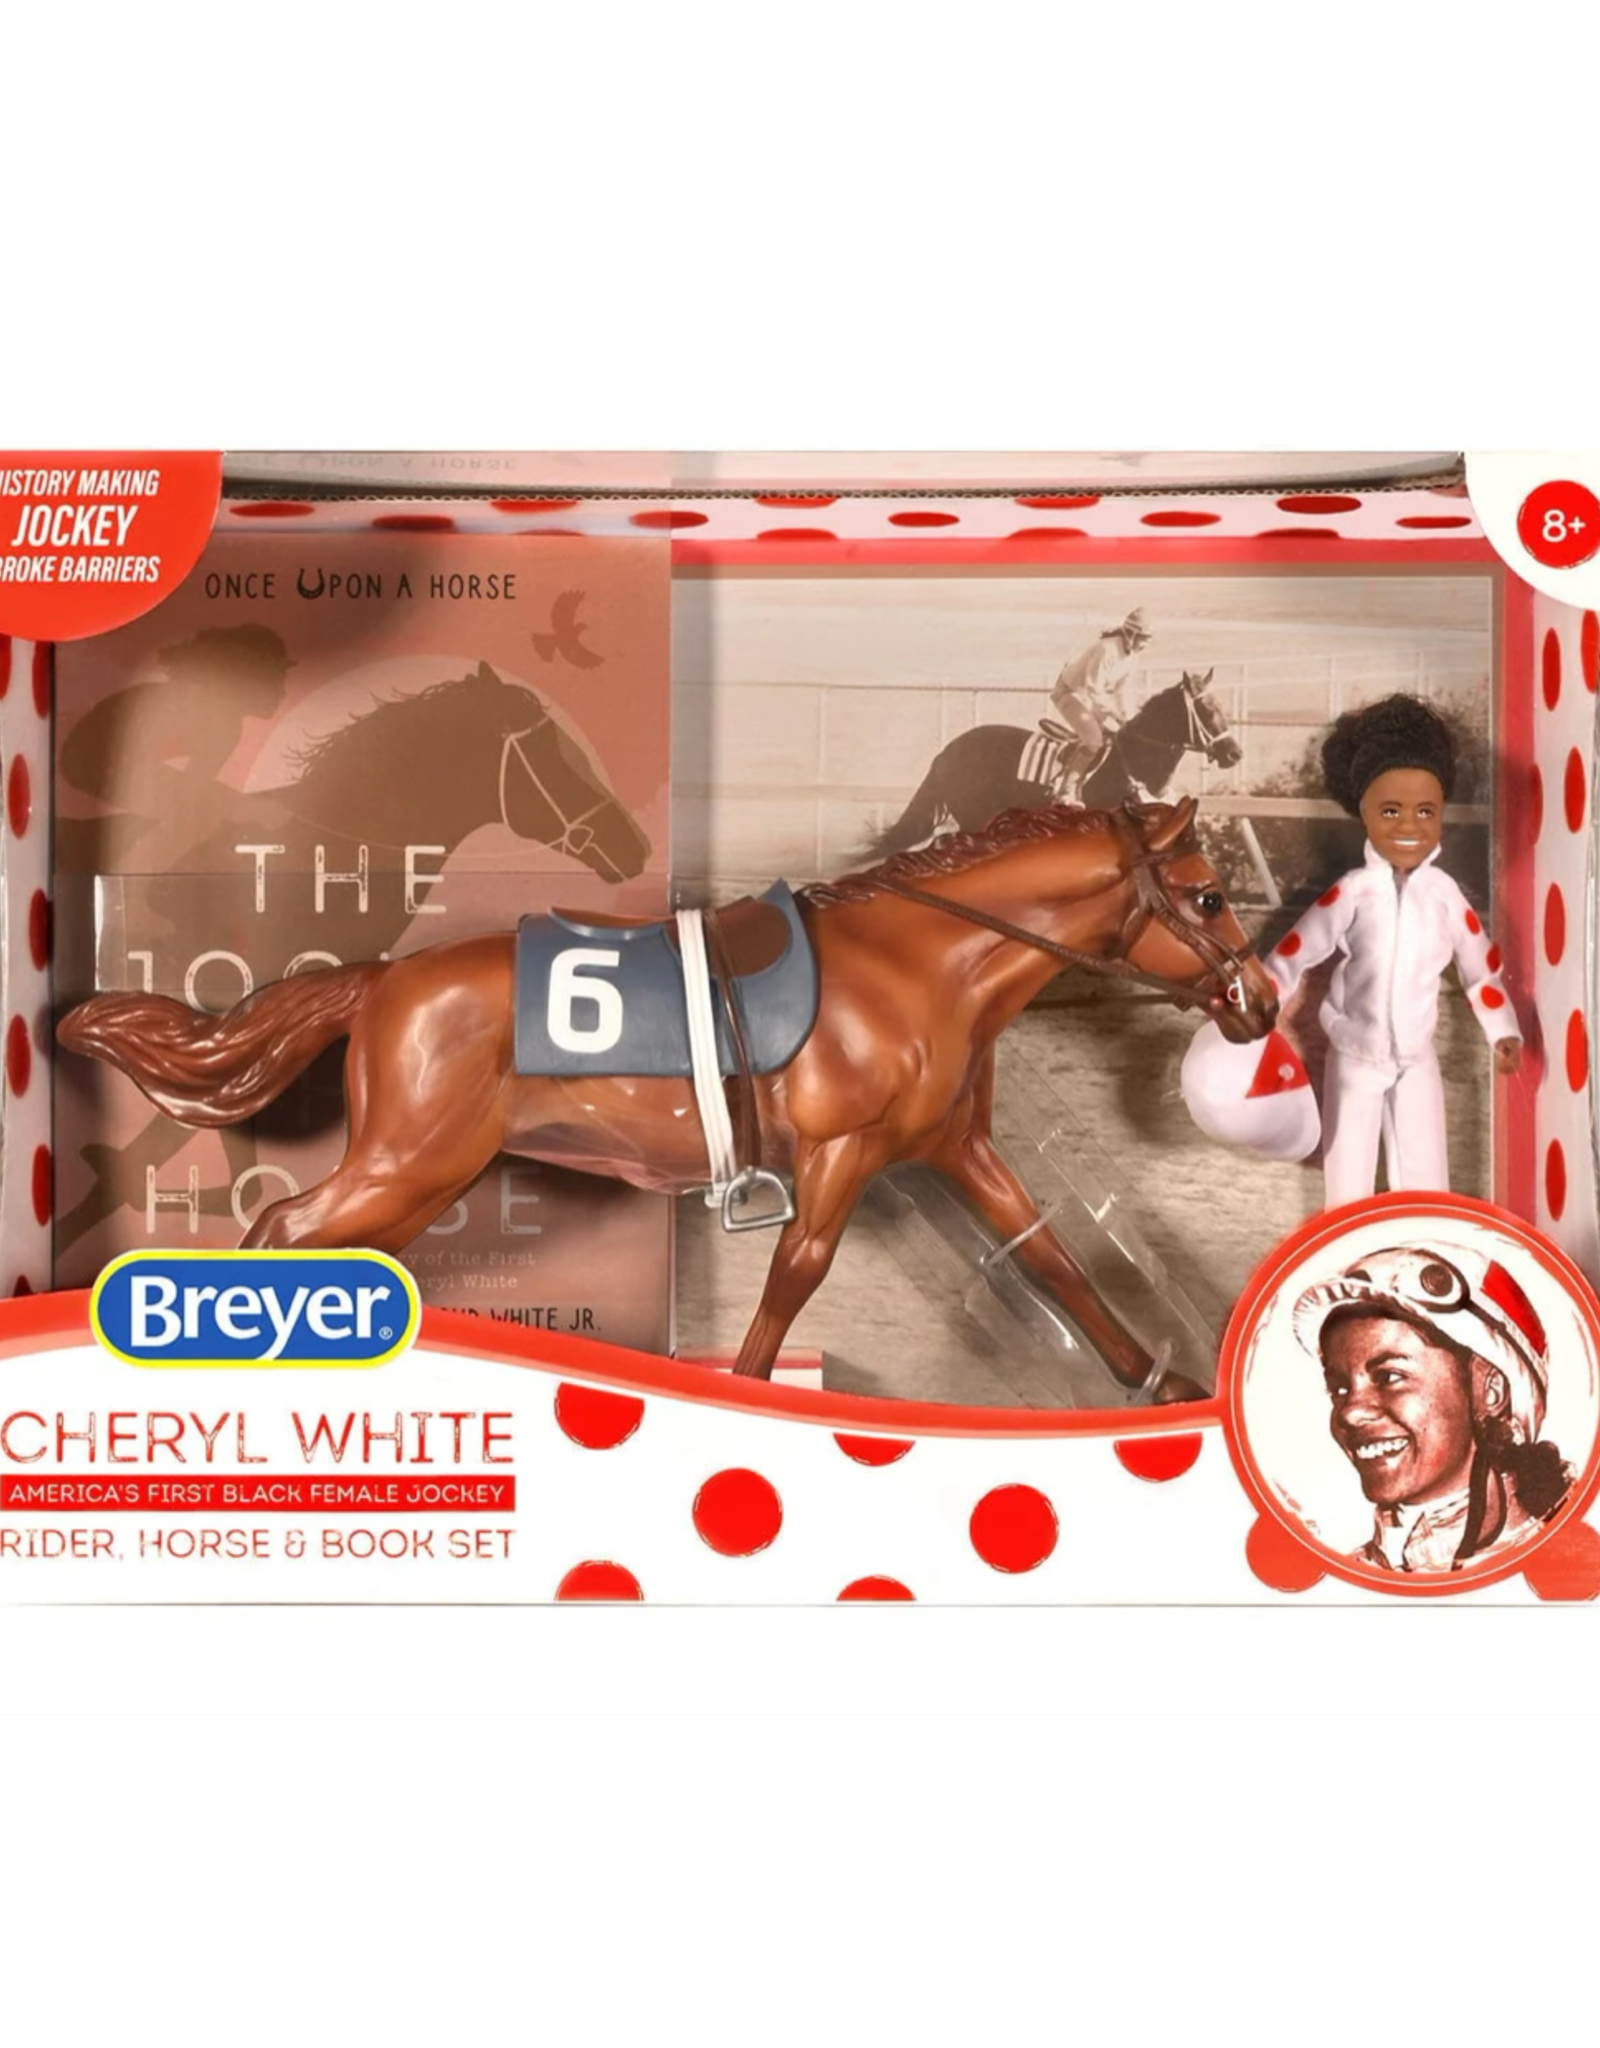 Breyer Cheryl White Rider, Horse, & Book Set